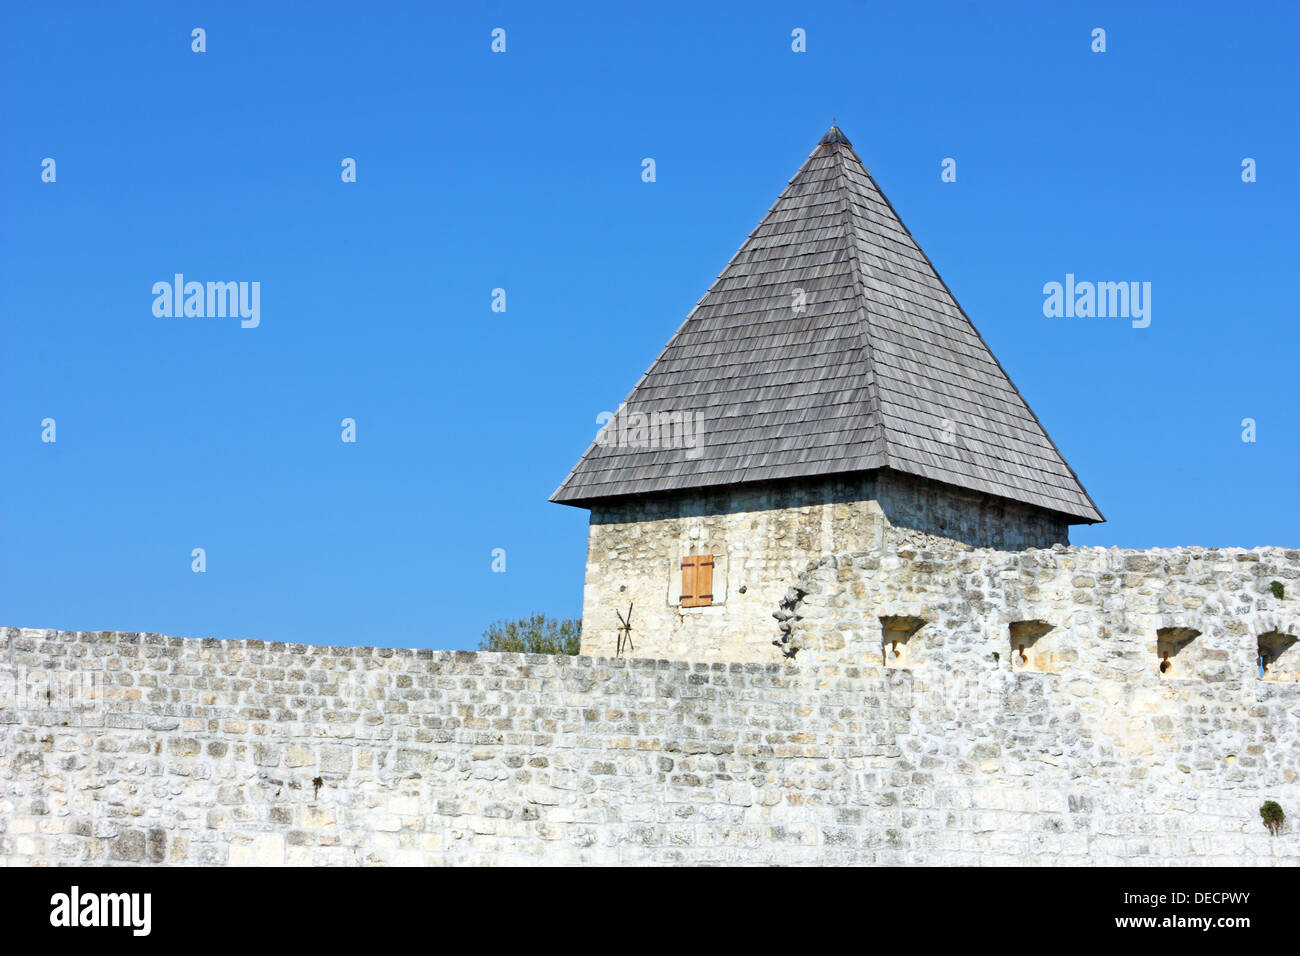 Detail of Zrinski castle, Hrvatska Costajnica, Croatia Stock Photo